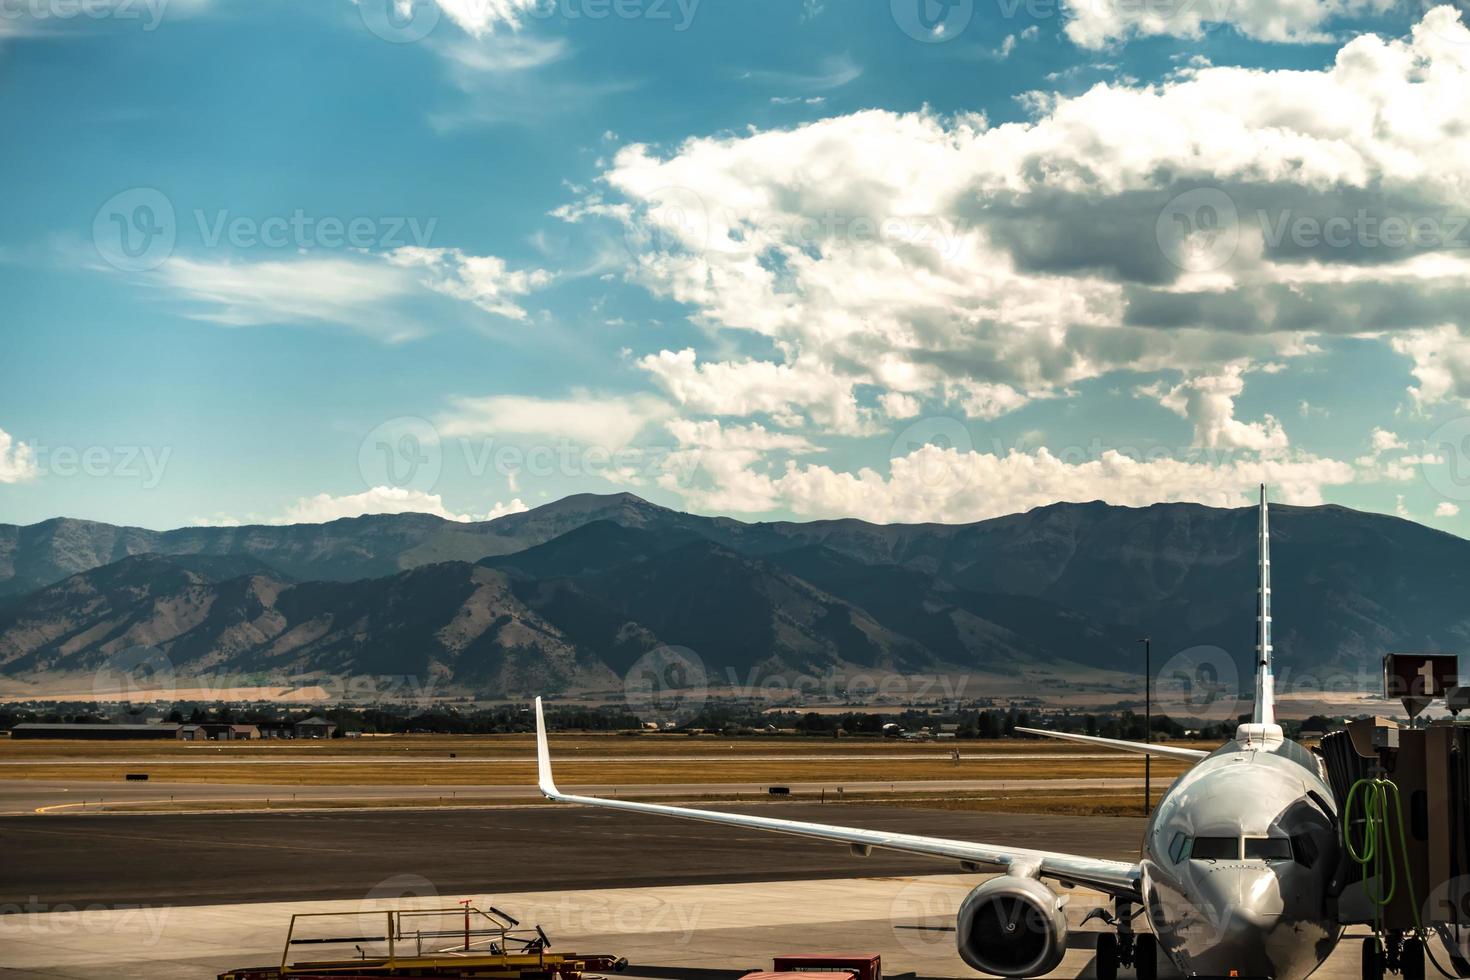 aeroporto bozeman montana e montanhas rochosas foto